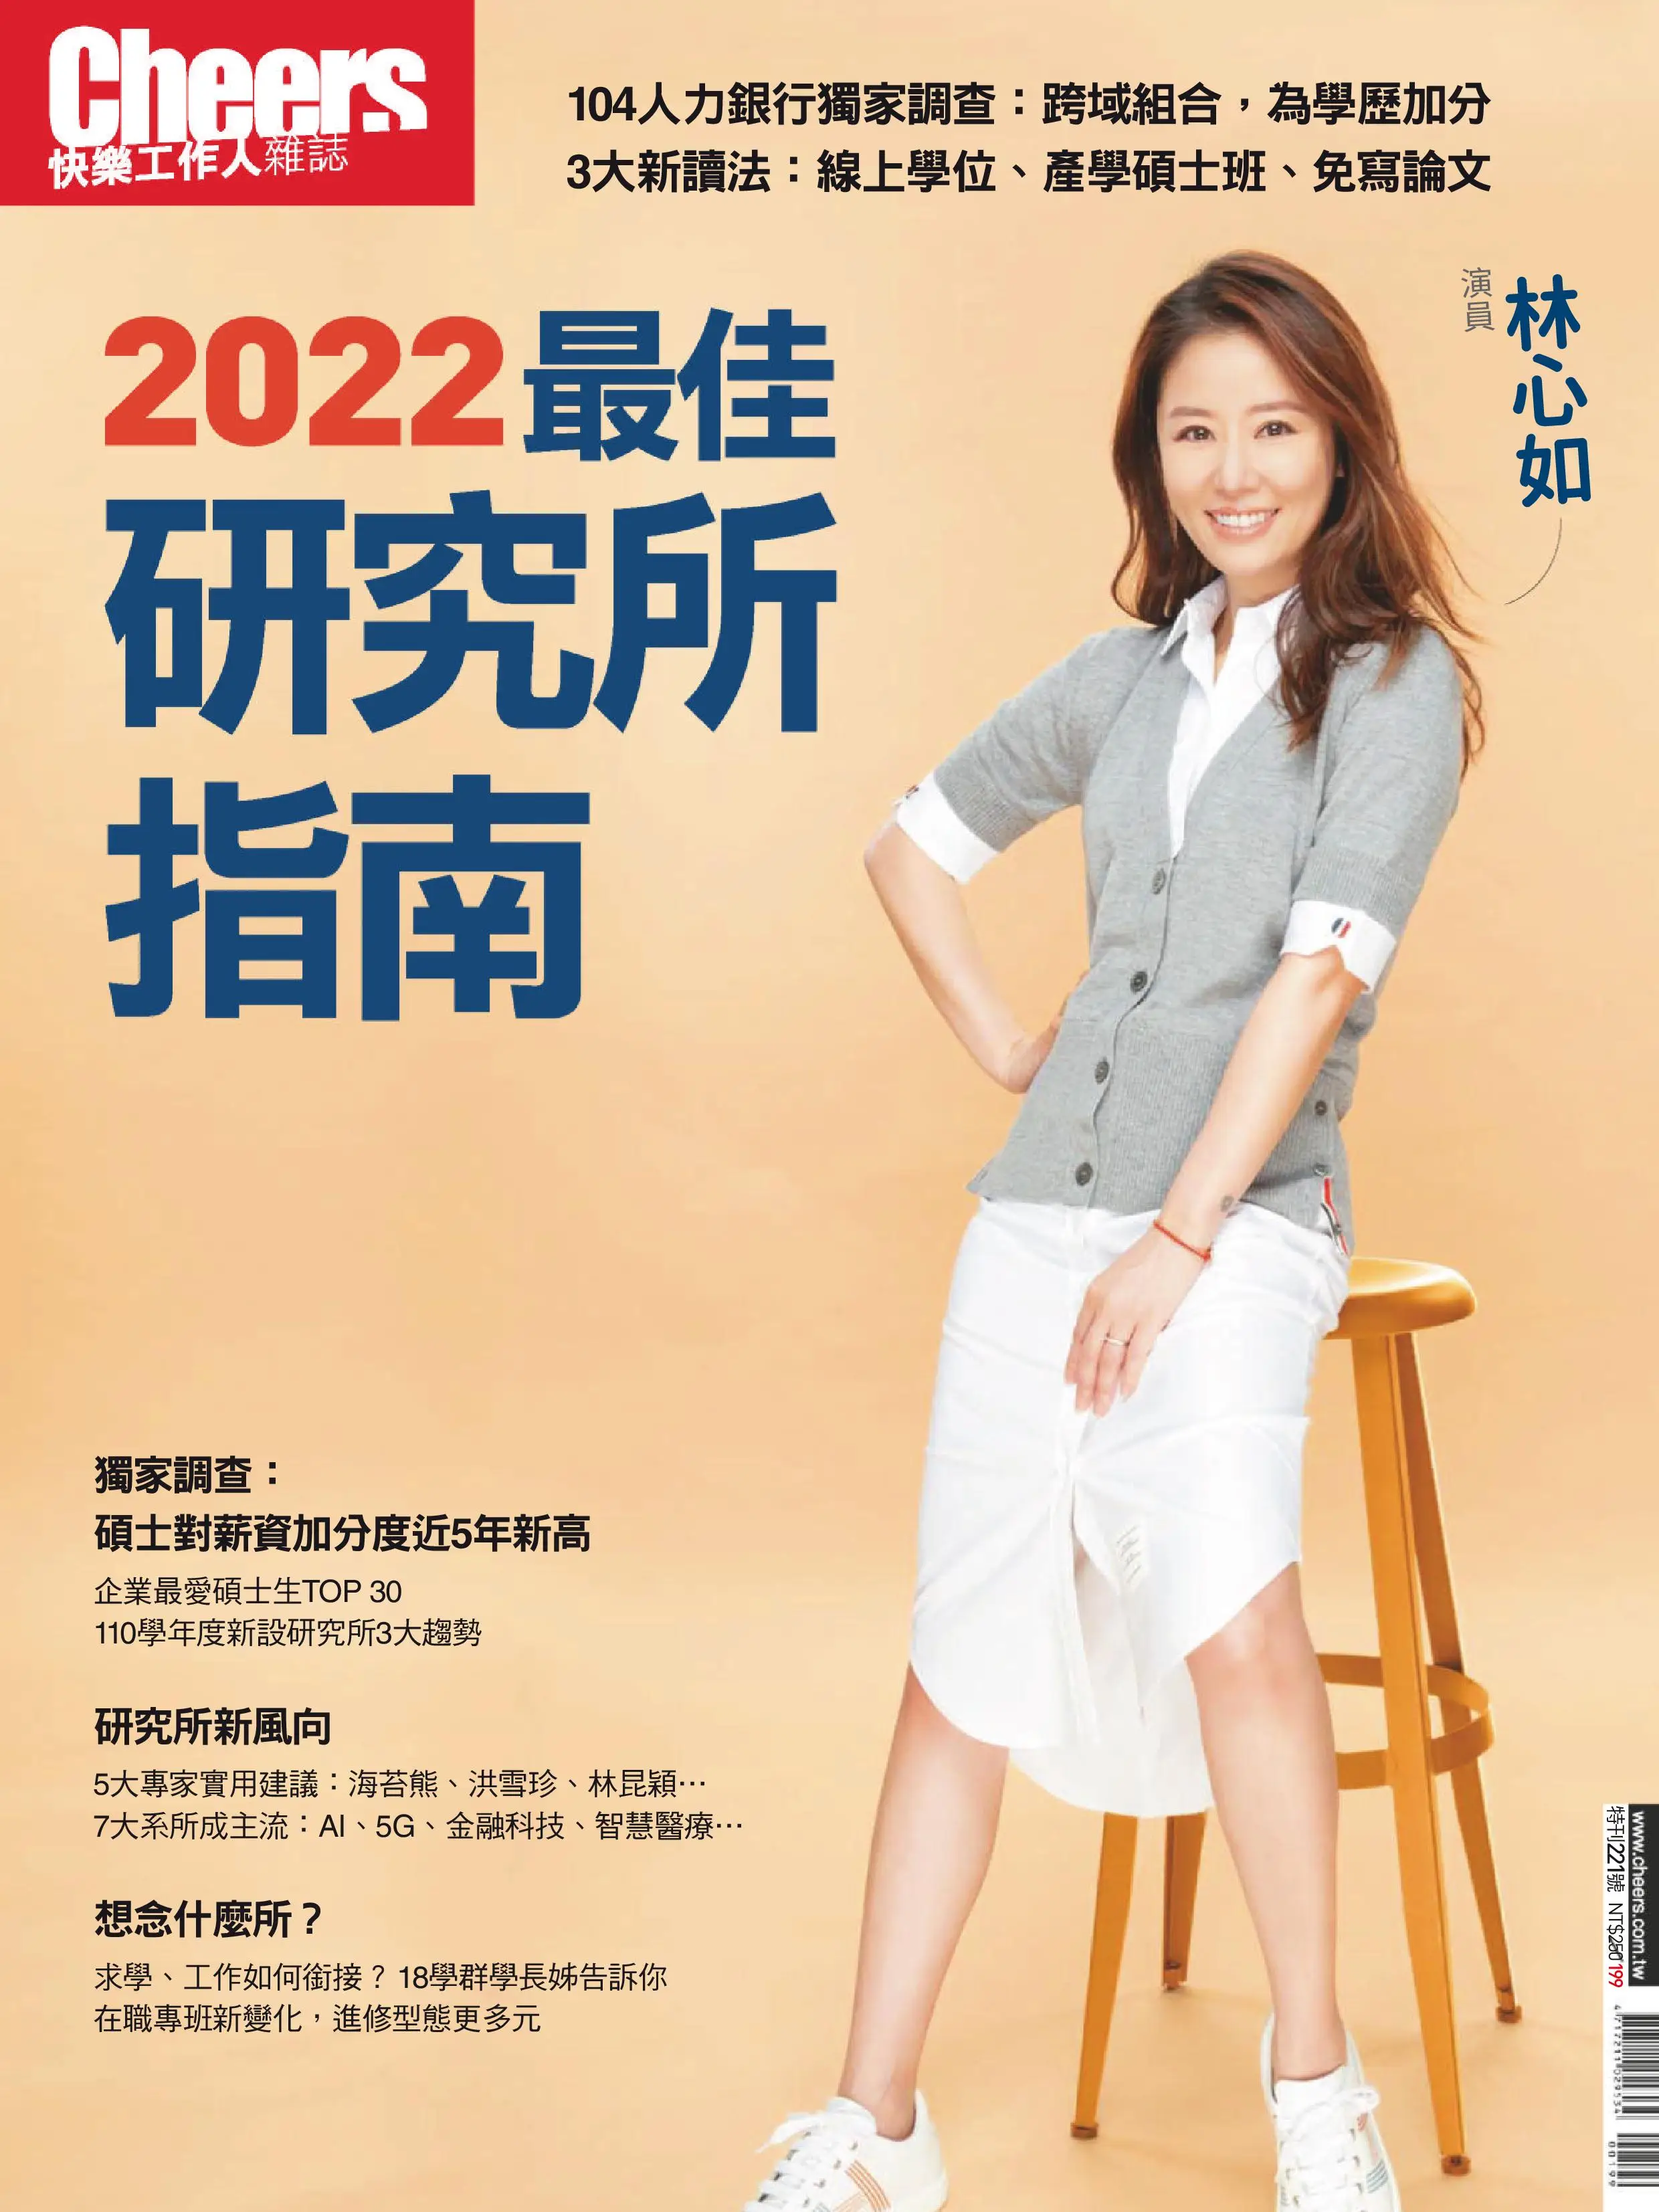 Cheers Special issue 快樂工作人特刊 - 九月 06, 2021